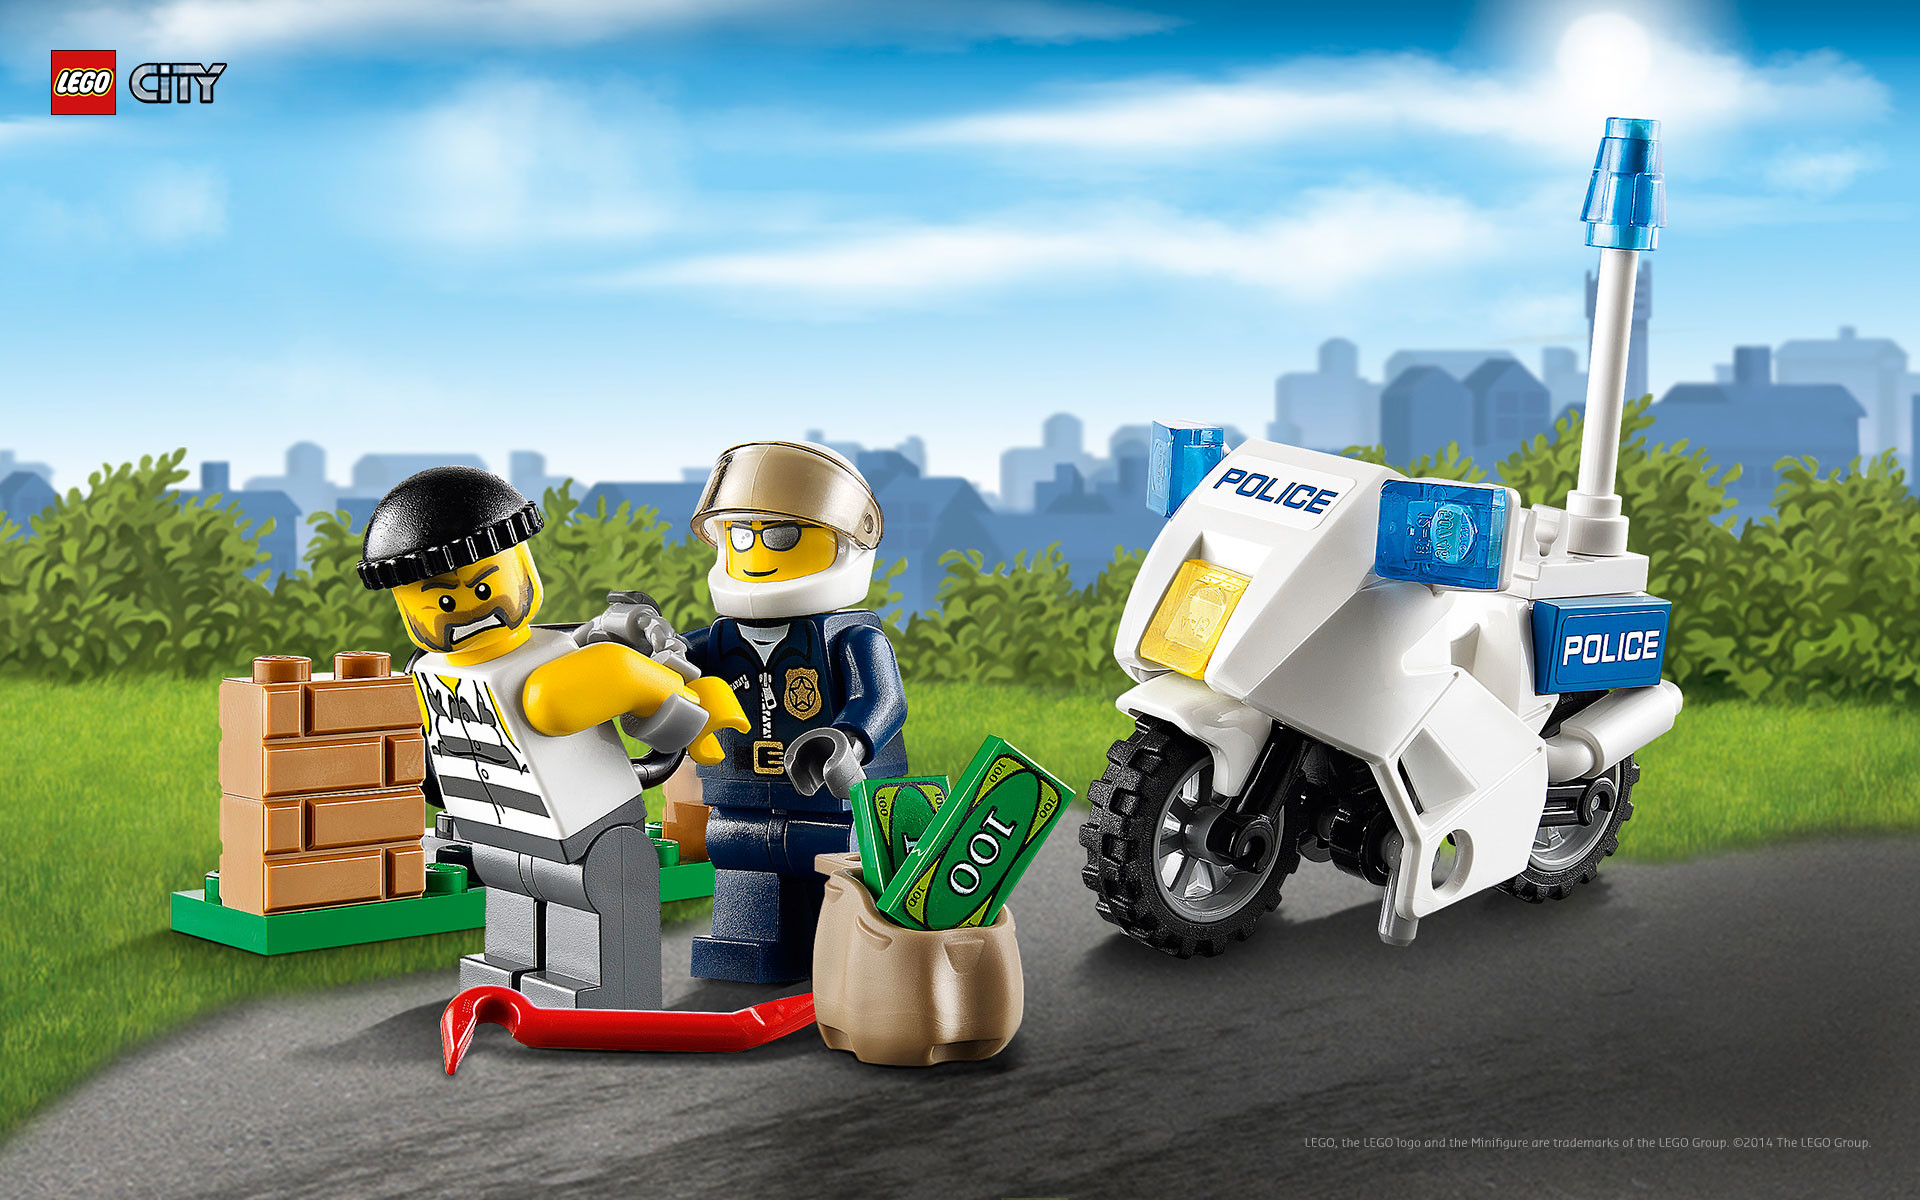 1920x1200 Wallpaper: LEGO City - Police 3